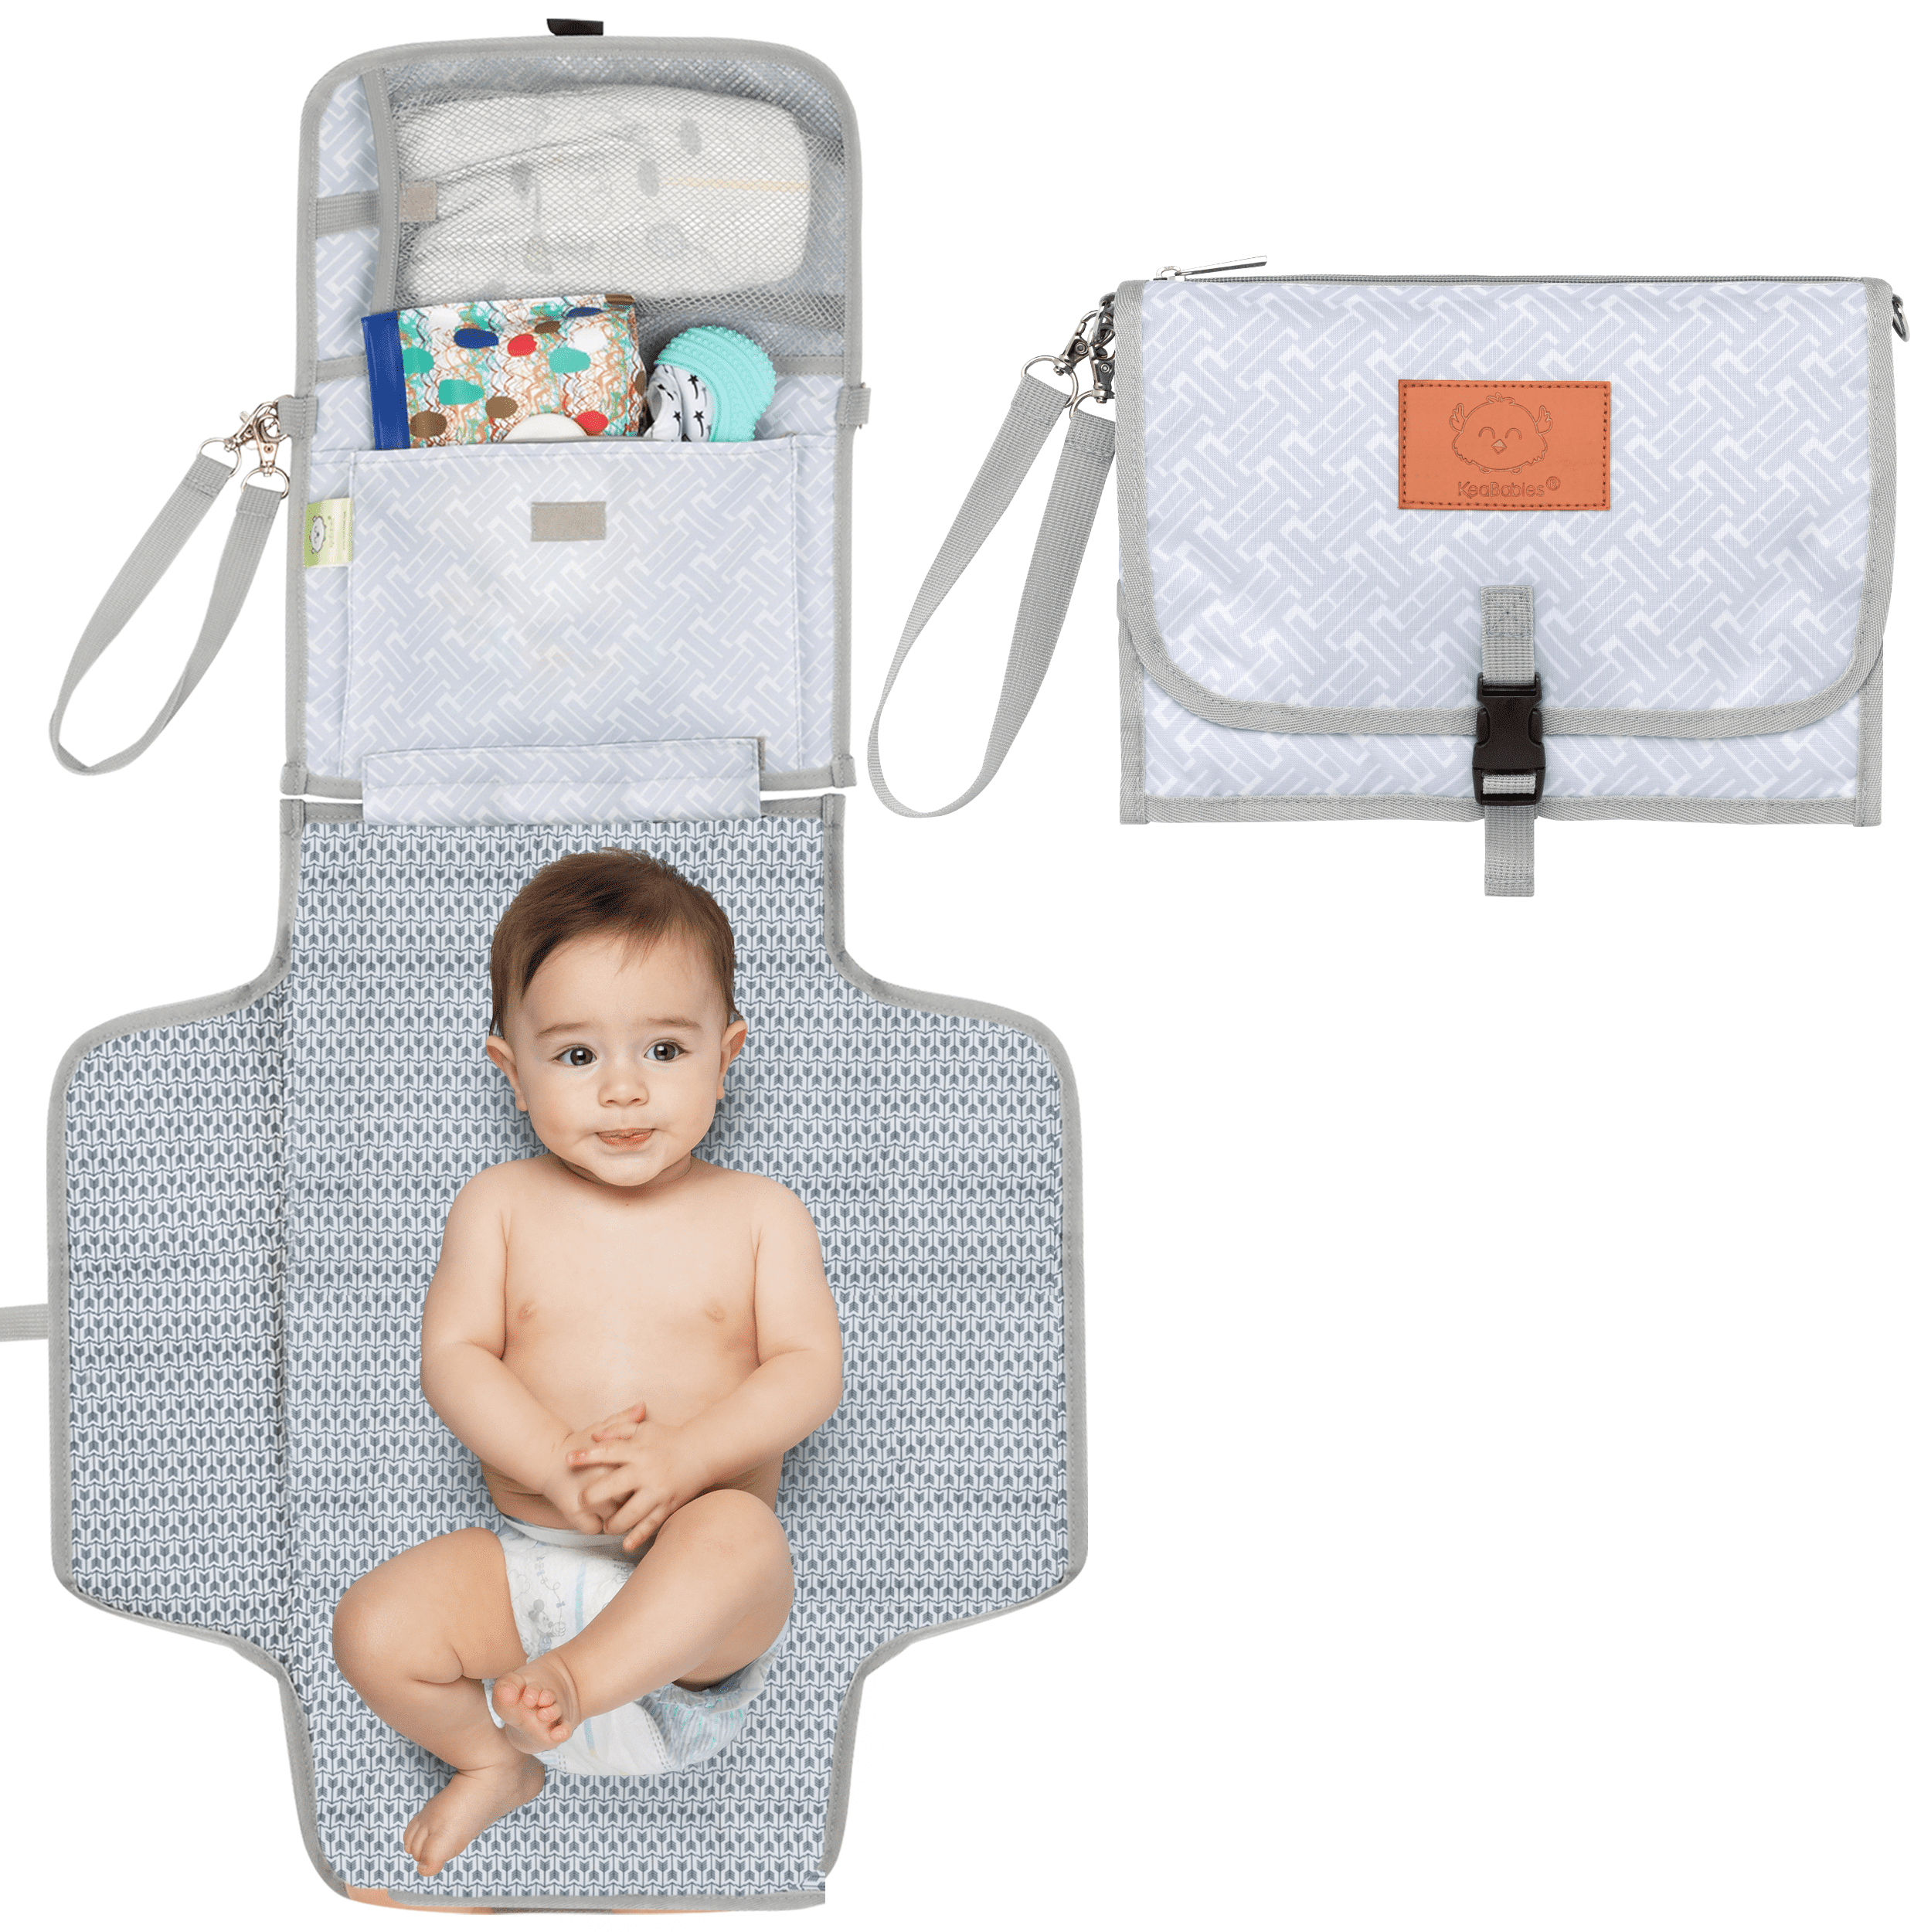 2018 Baby Portable Folding Diaper Travel Changing Pad Waterproof Mat Bag Storage 